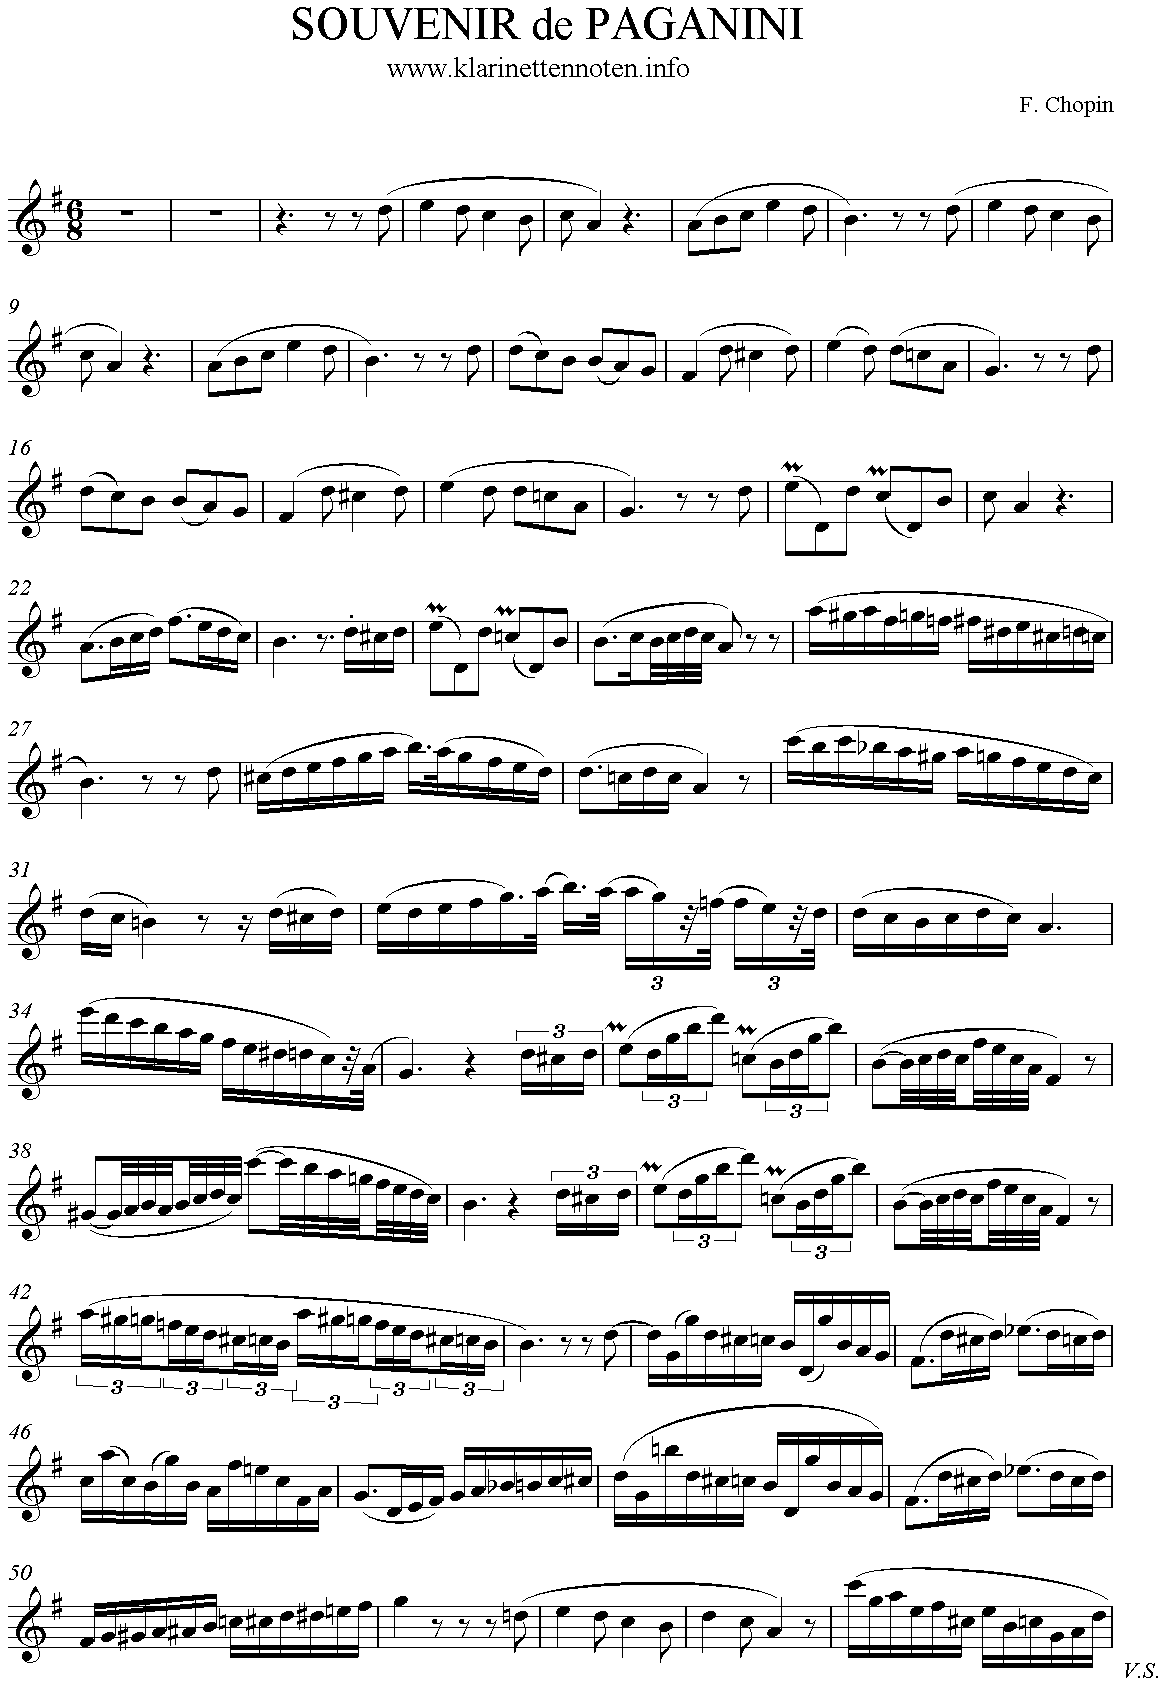 Souvenir de Paganini, F. Chopin, G-Major